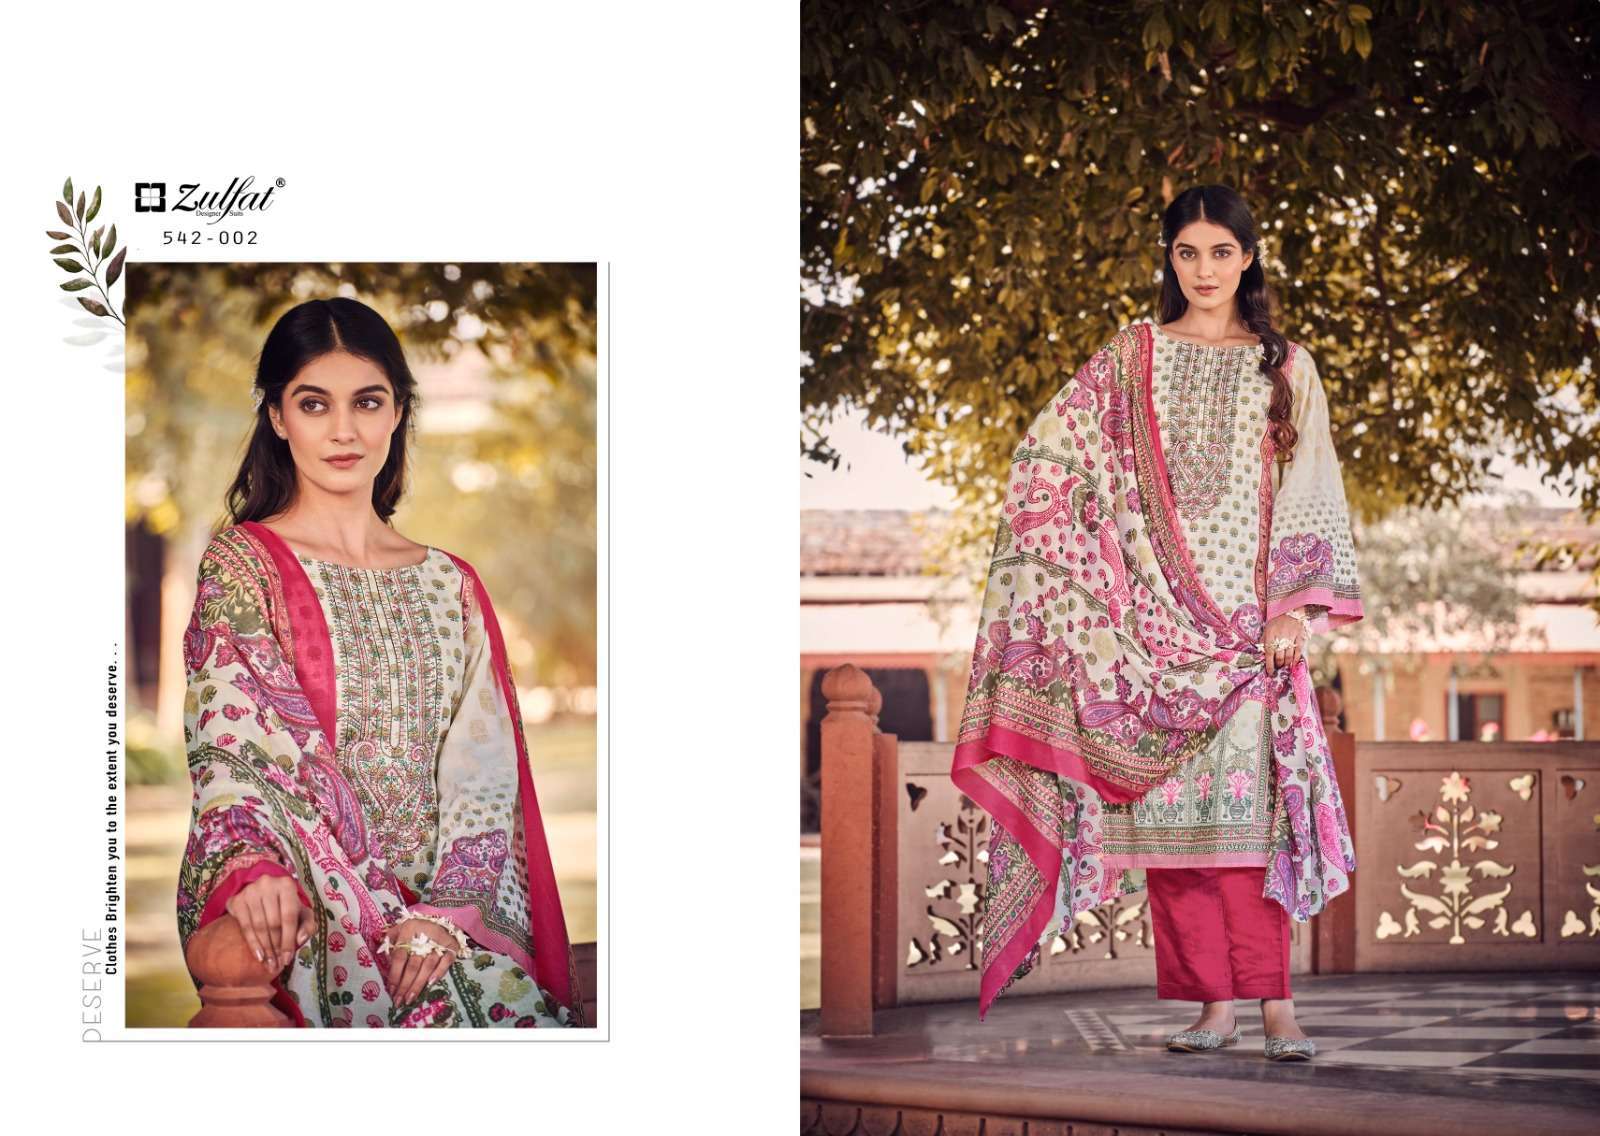 Zulfat Designer Suits Jannat Cotton With Embroidery Work Salwar Kameez For Women At Best Rate